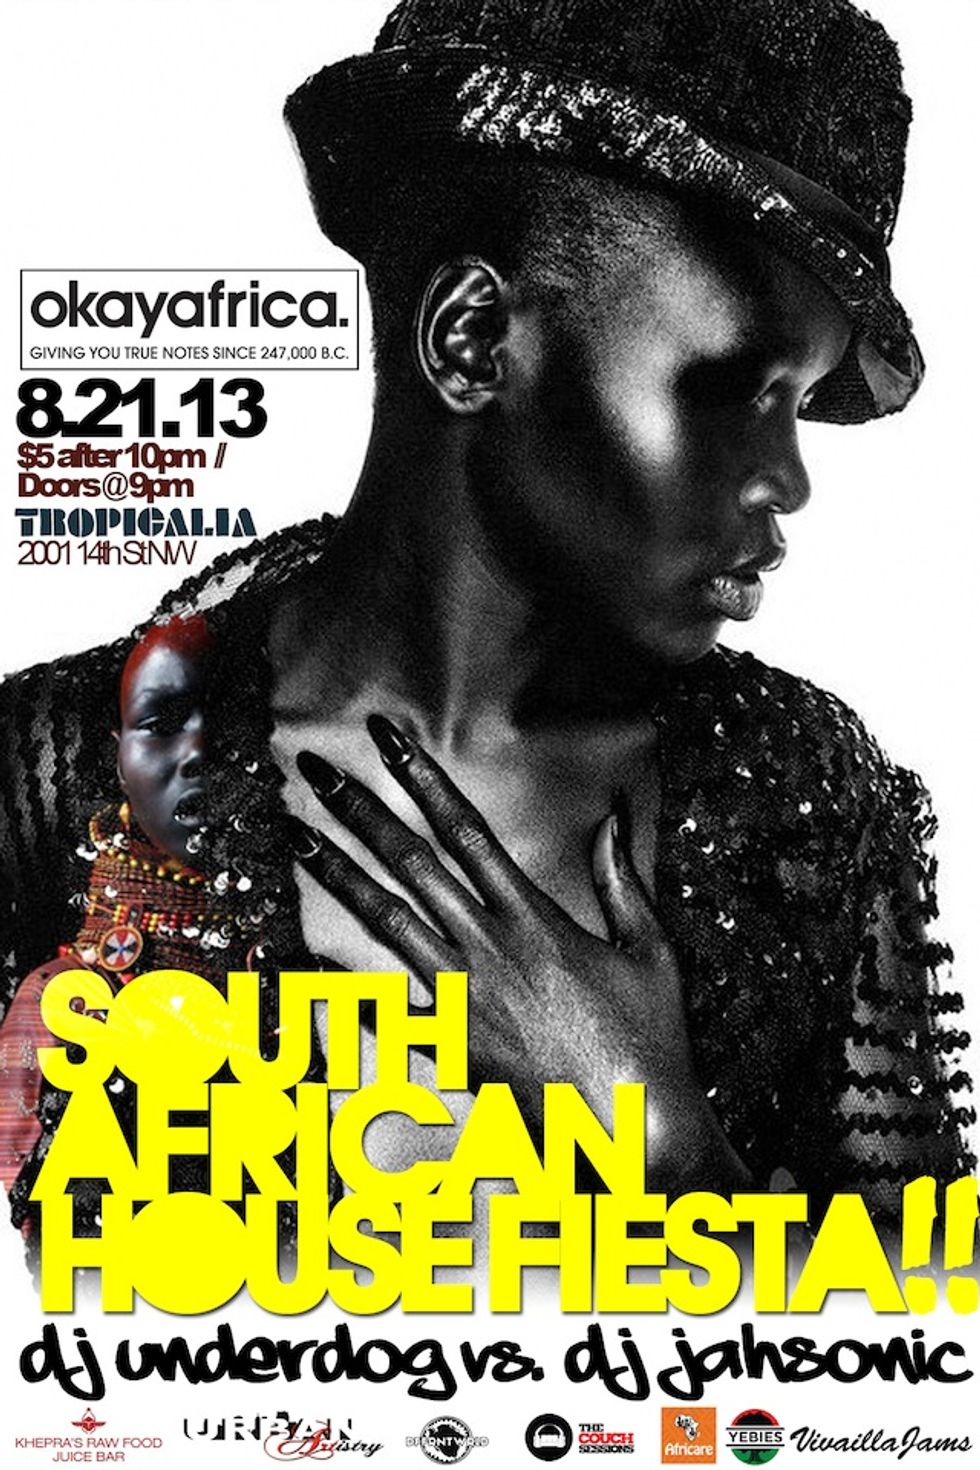 #OKAYAFRICADC South African House Fiesta!